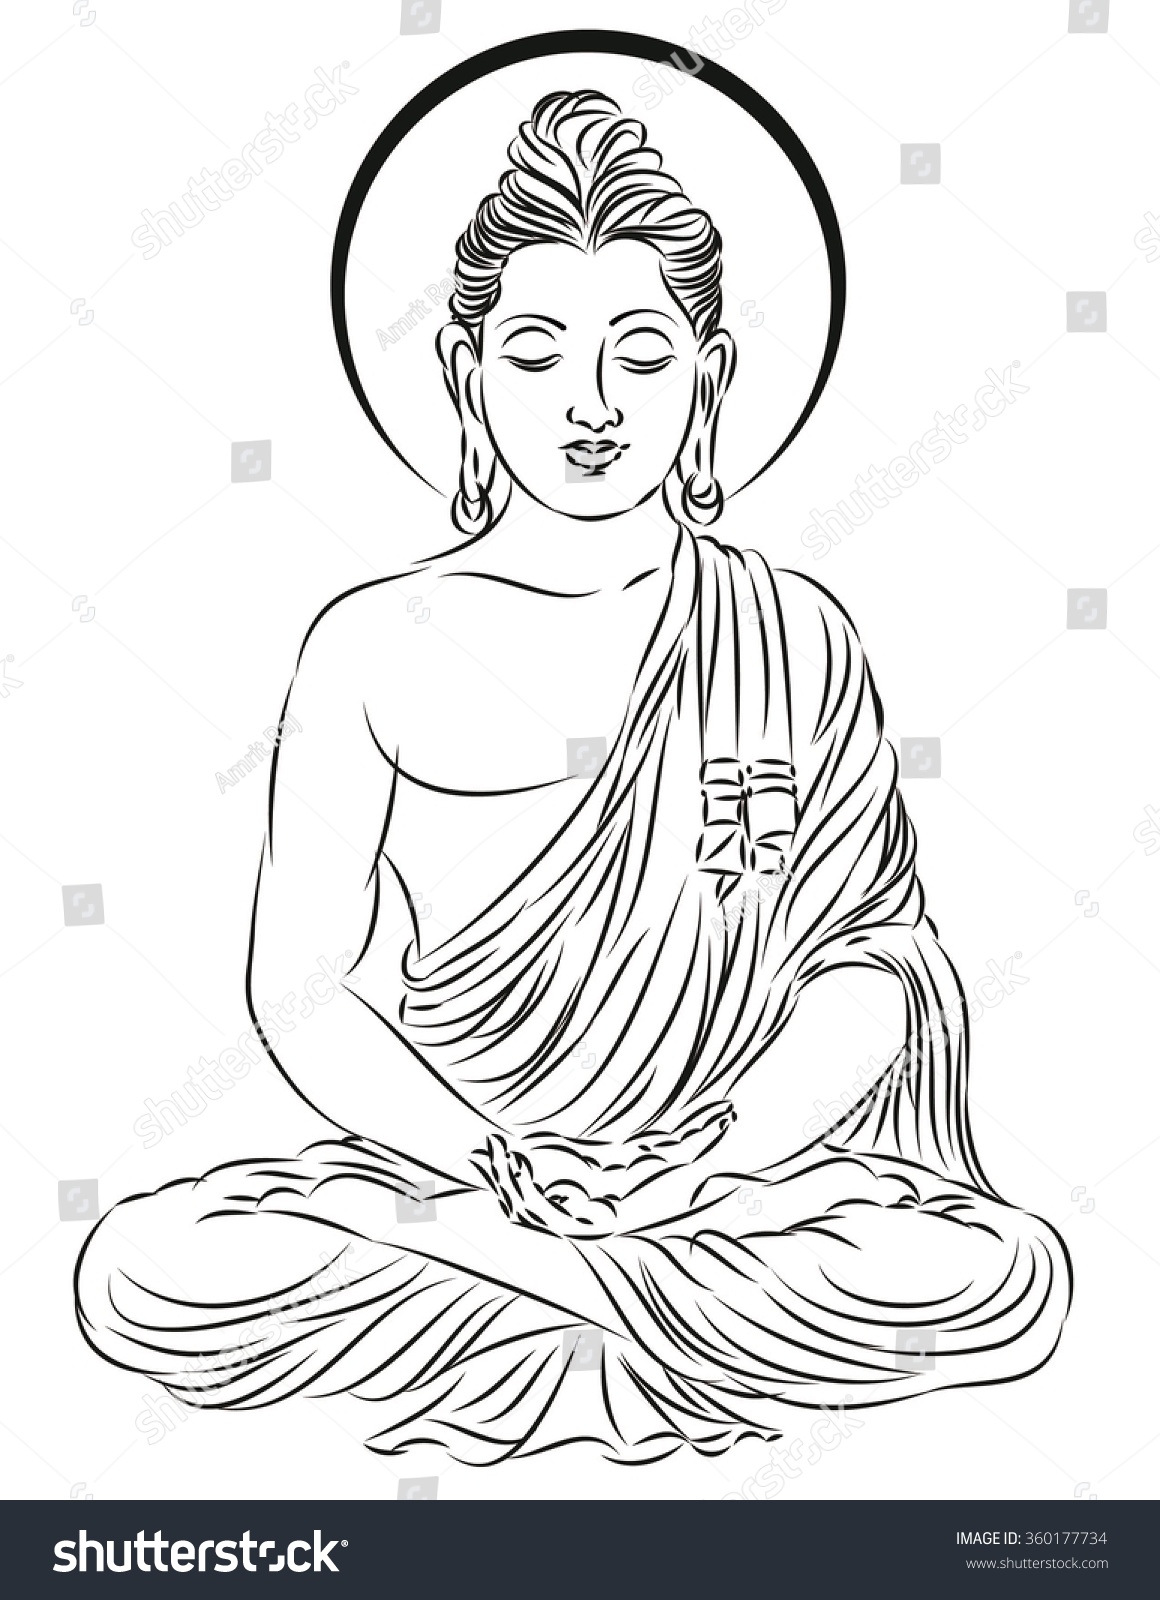 Lord Buddha Stock Photo 360177734 Avopixcom